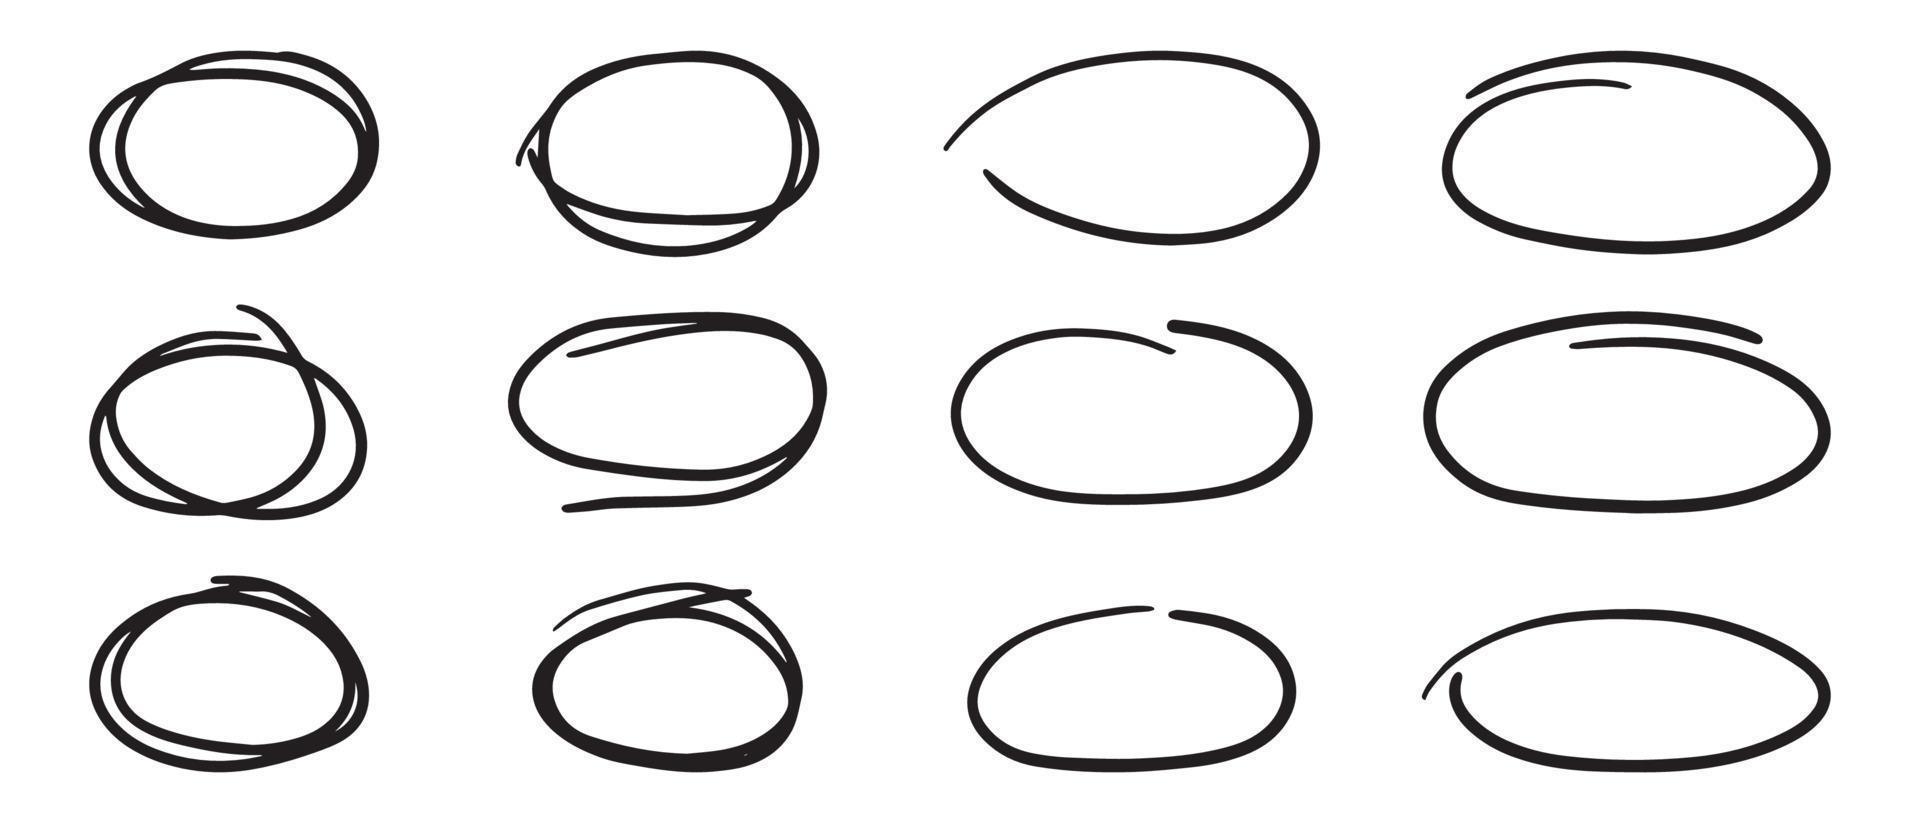 Super set of circles lines sketch hand drawn. Doodle circles for design elements vector